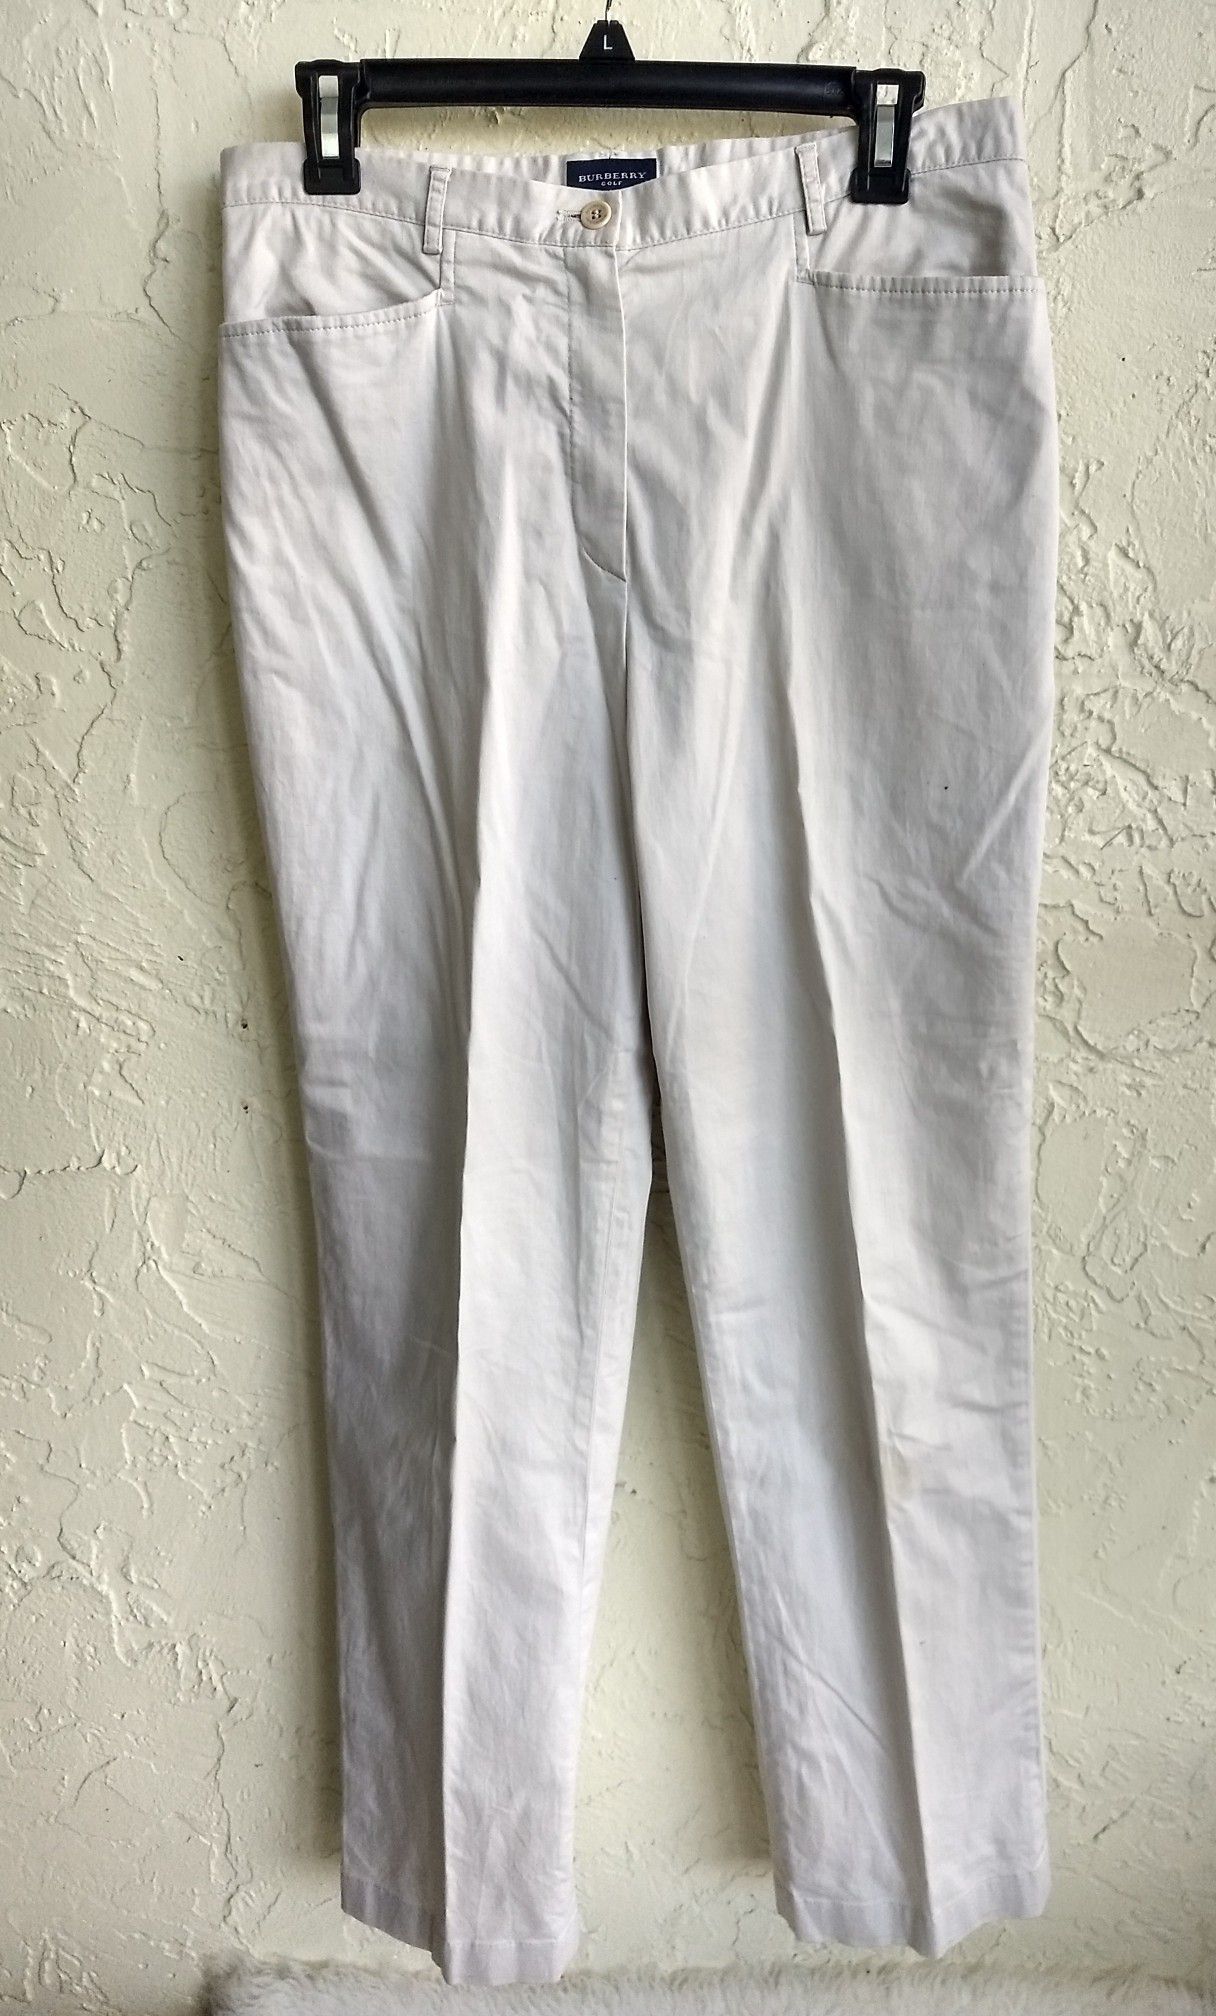 BURBERRY Women's Tan Cotton Elestane Stretch Golf Pants sz 8 with Pockets